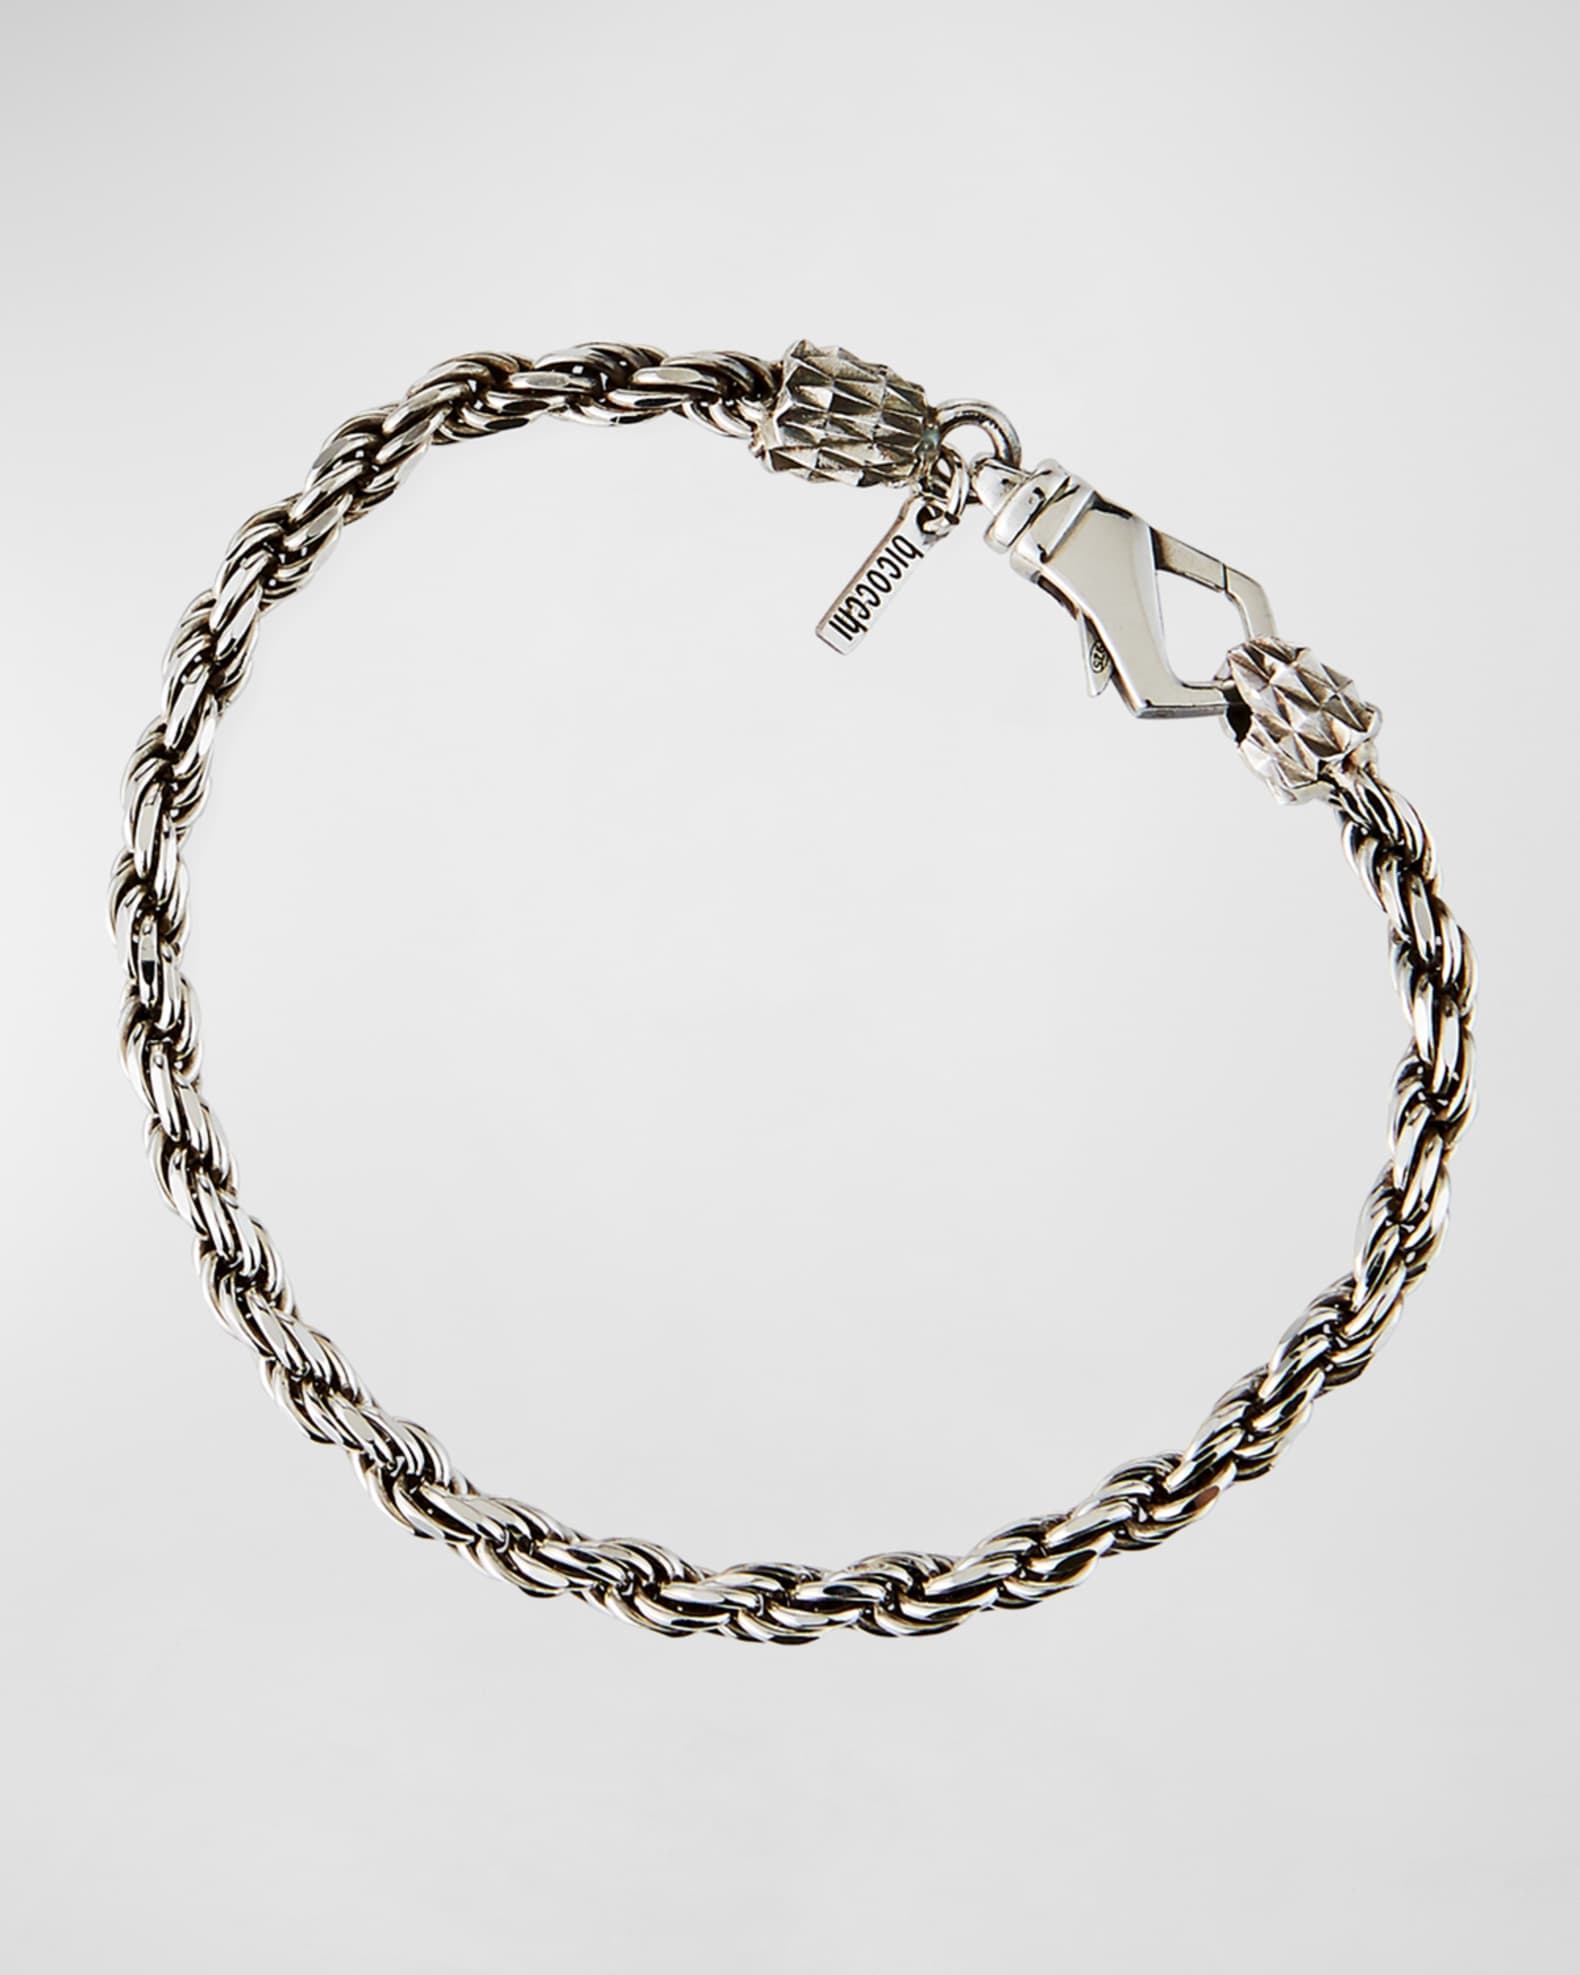 Double Wrap Leather Bracelet Stainless Steel, Men's, by Ben Bridge Jewelers